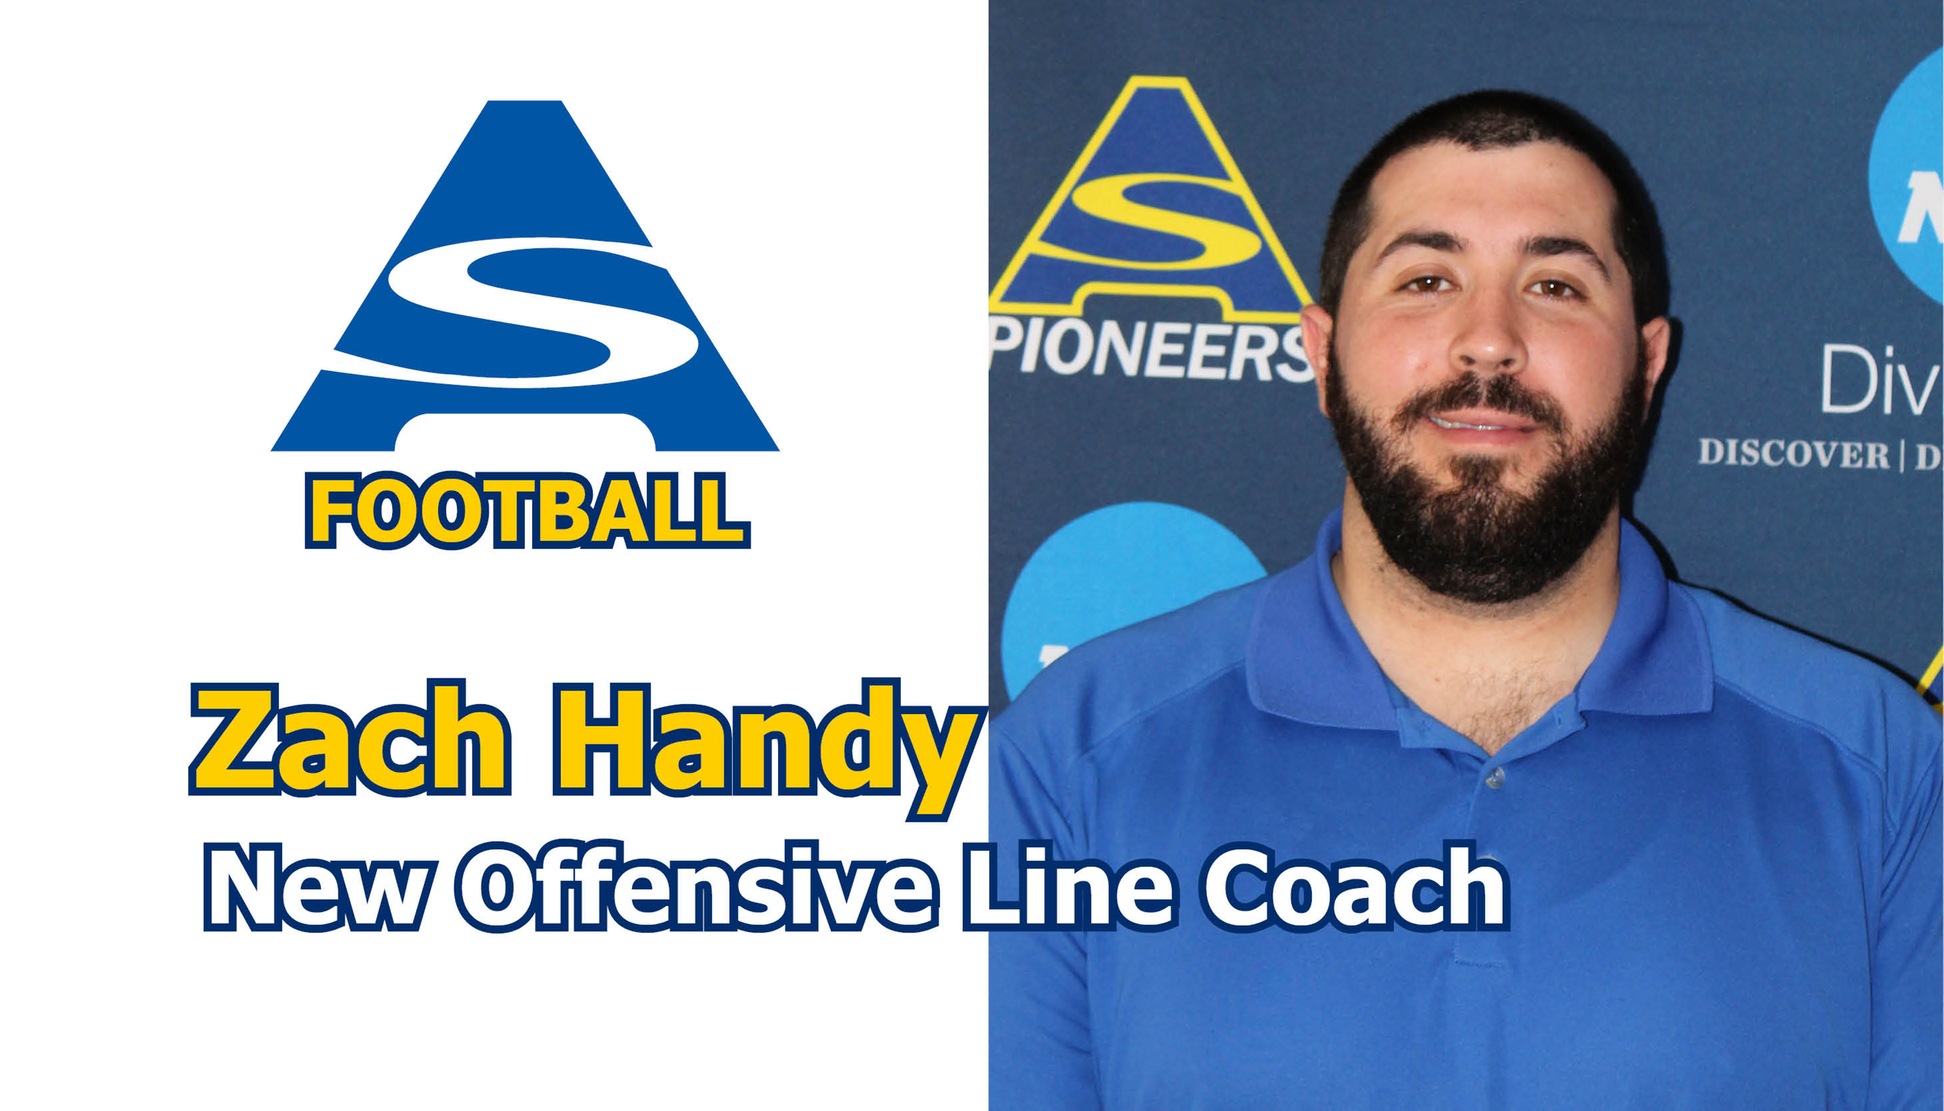 Zach Handy named new offensive line coach